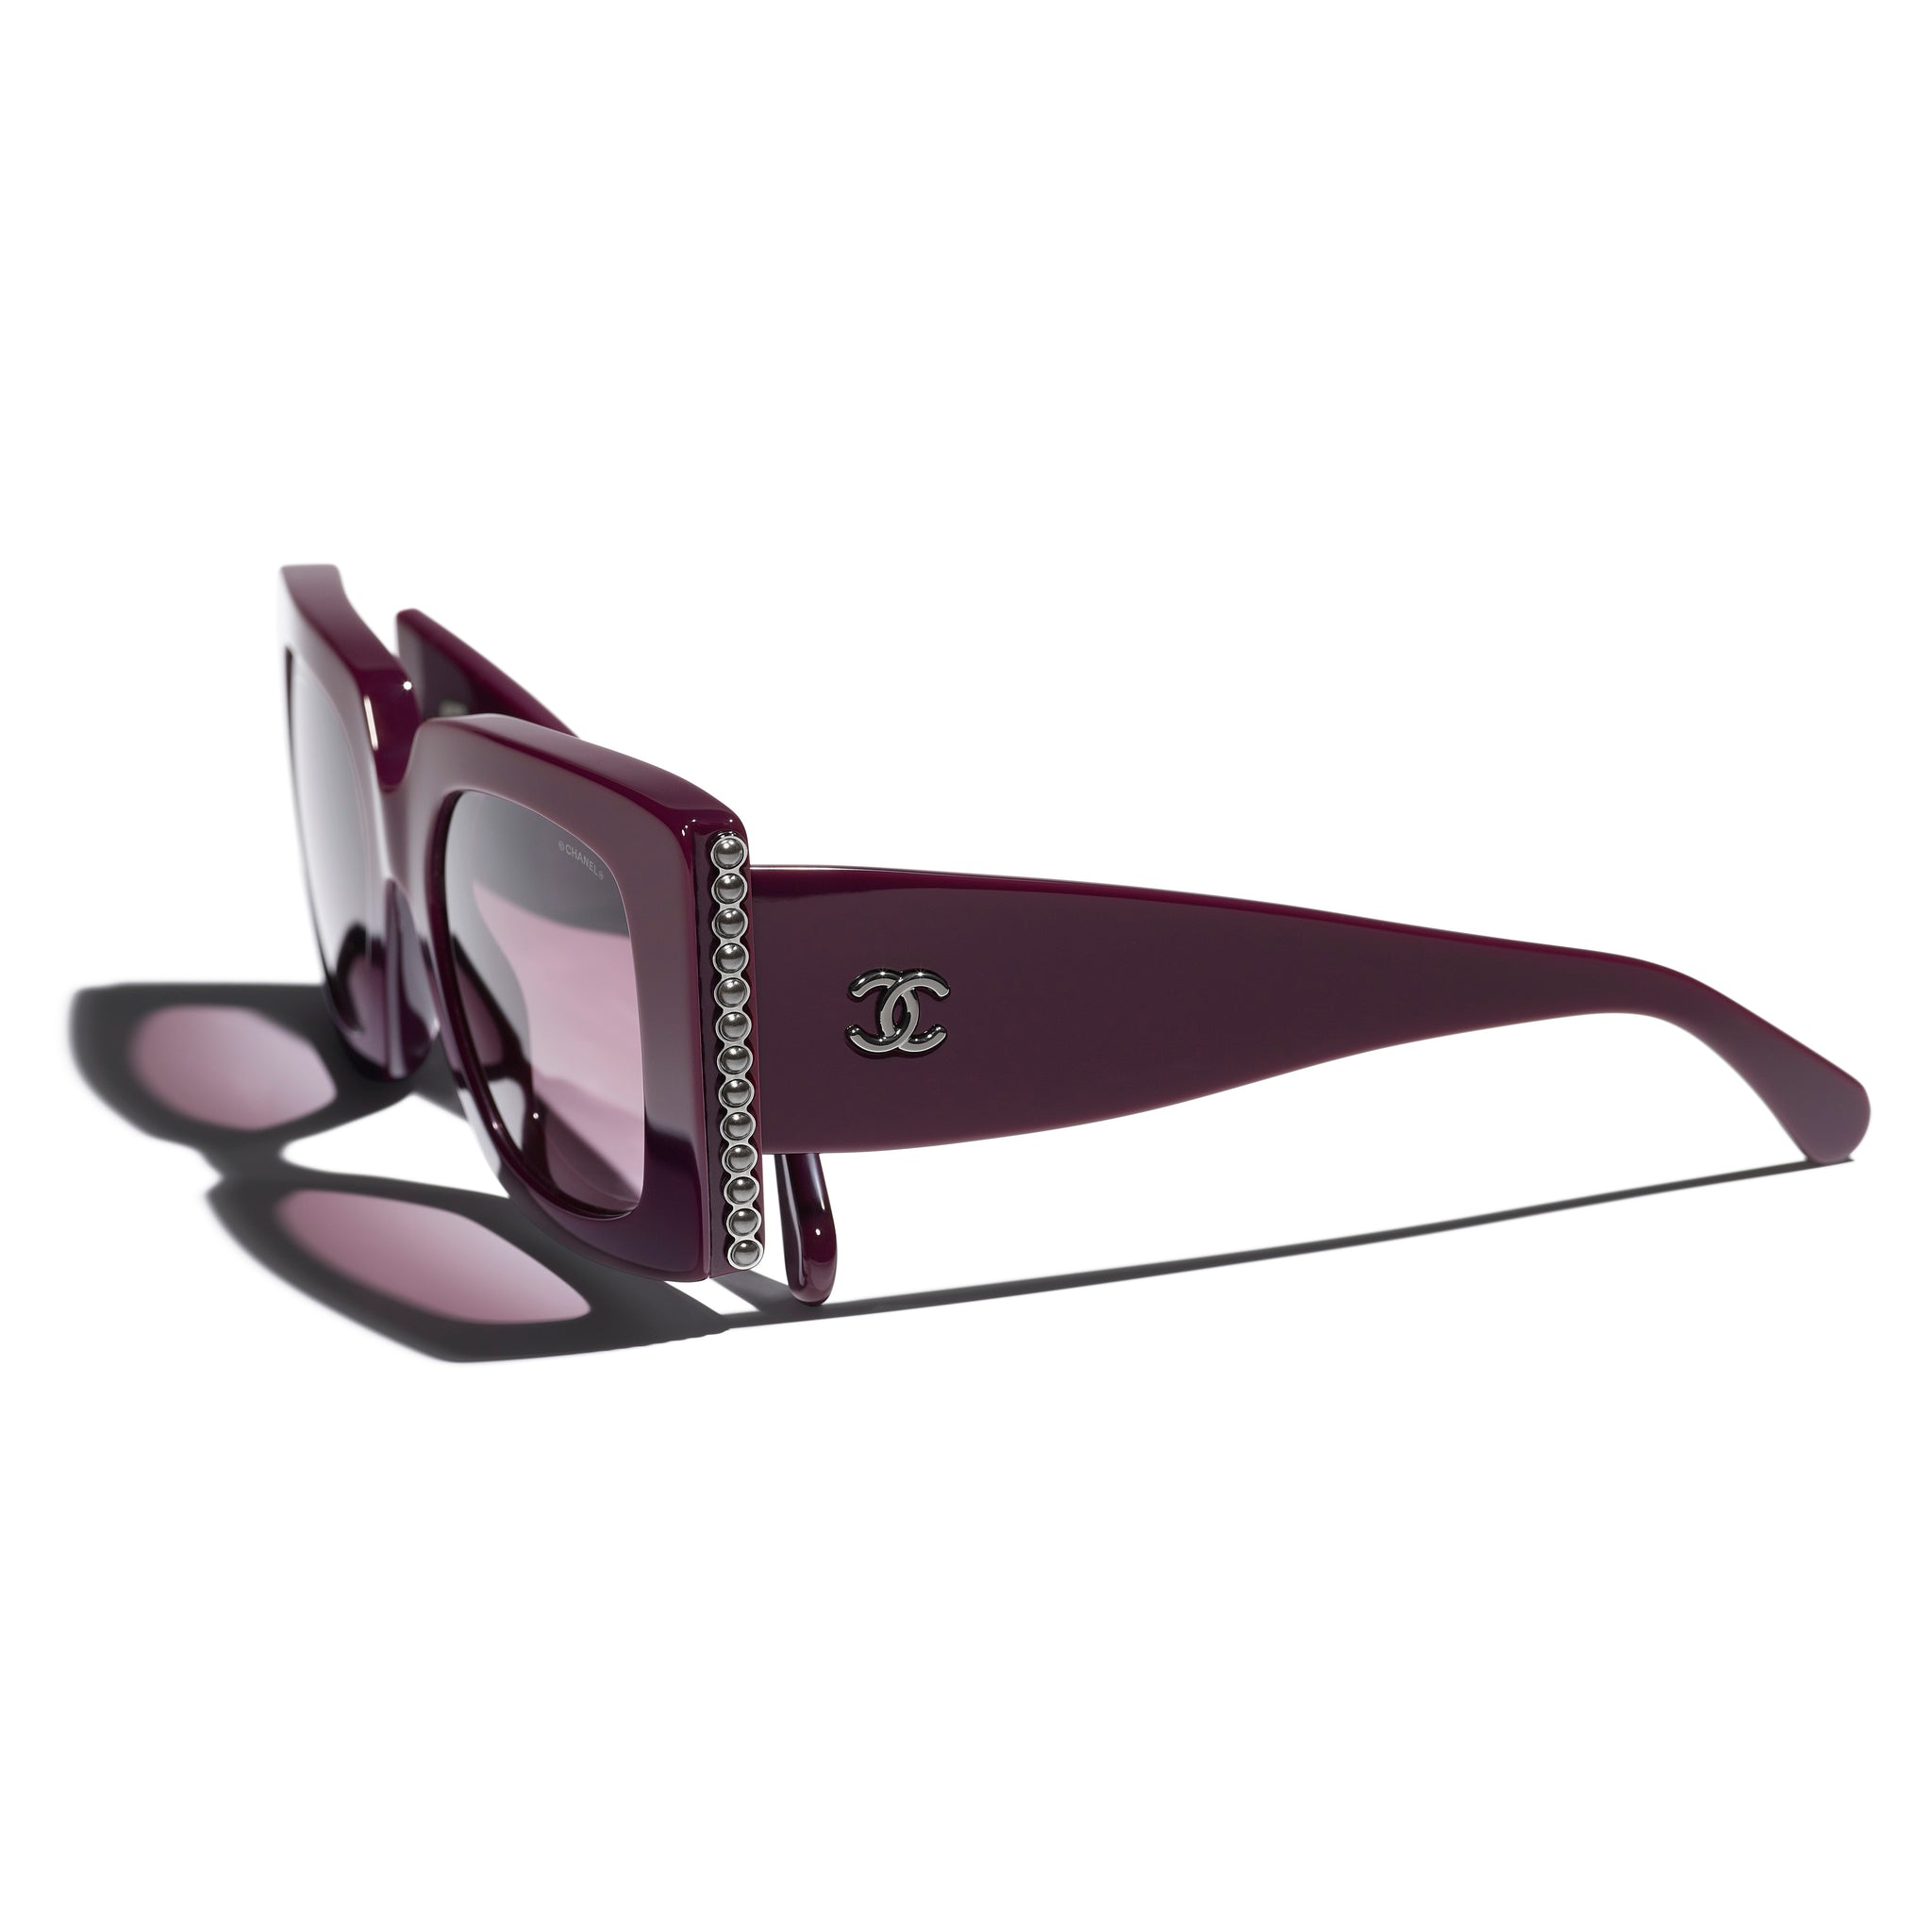 Sunglasses: Square Sunglasses, acetate & glass pearls — Fashion